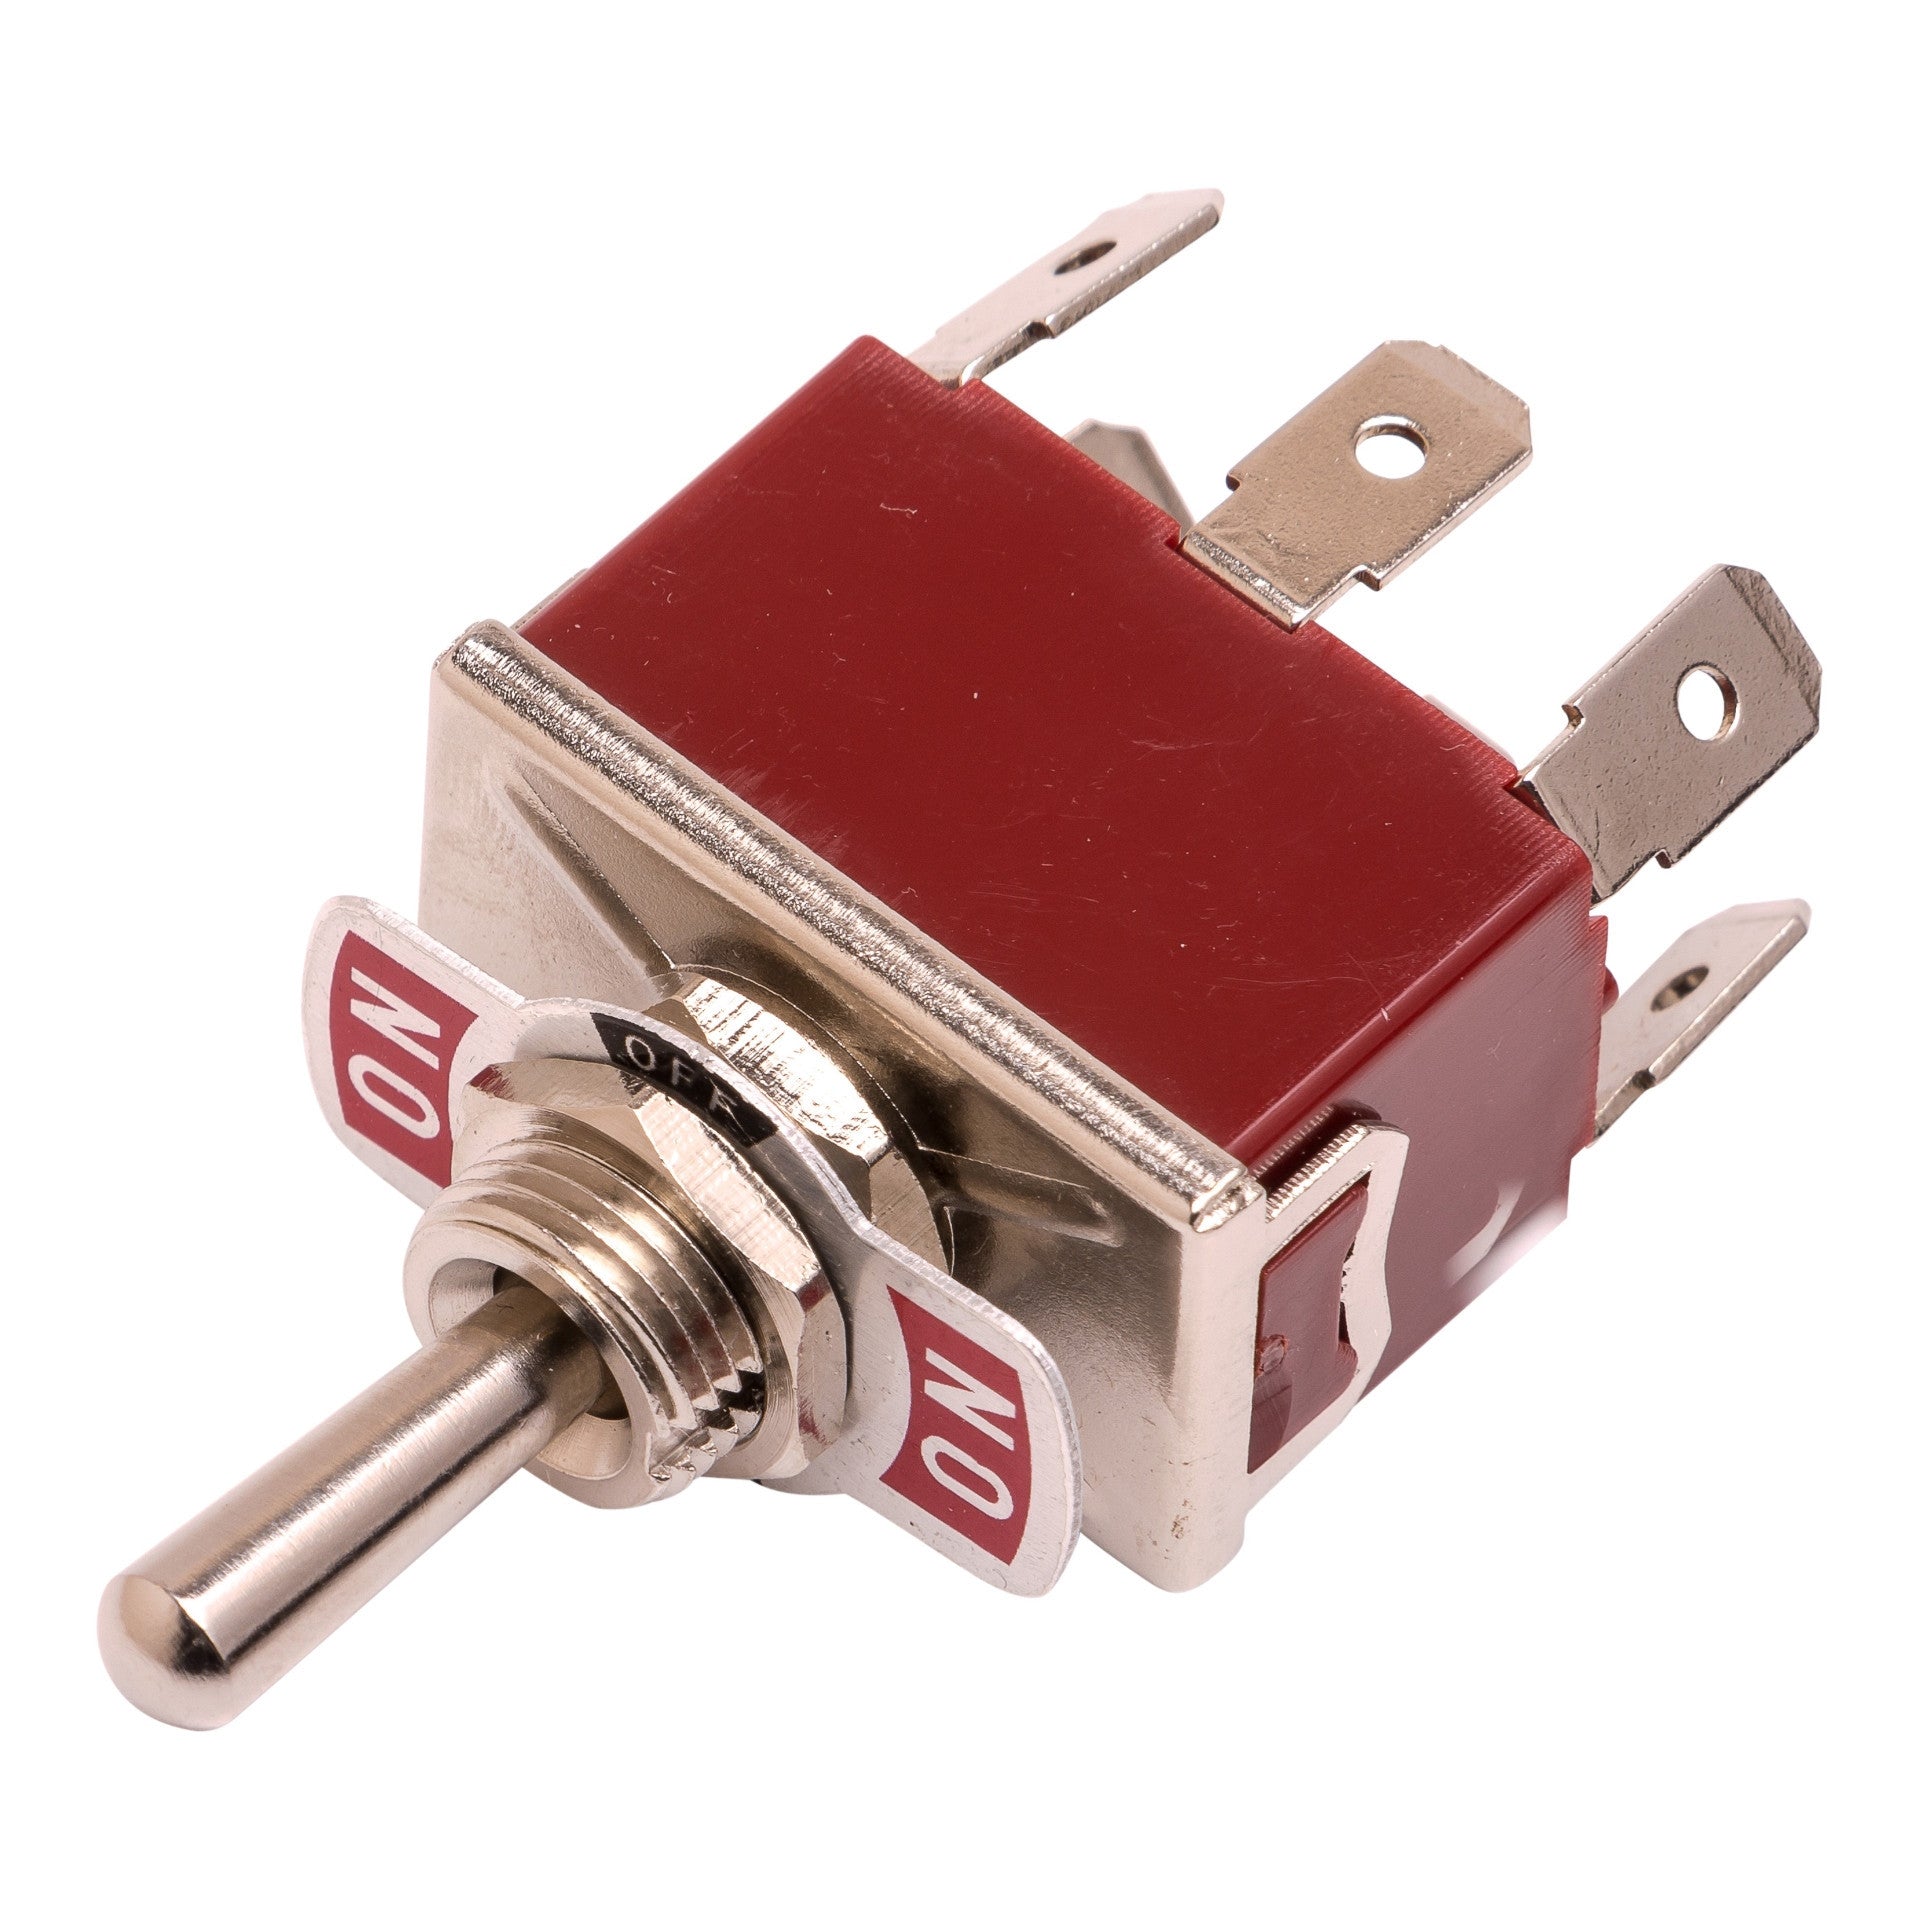 Interruptor de palanca para actuadores o motores (DPDT) Product Image